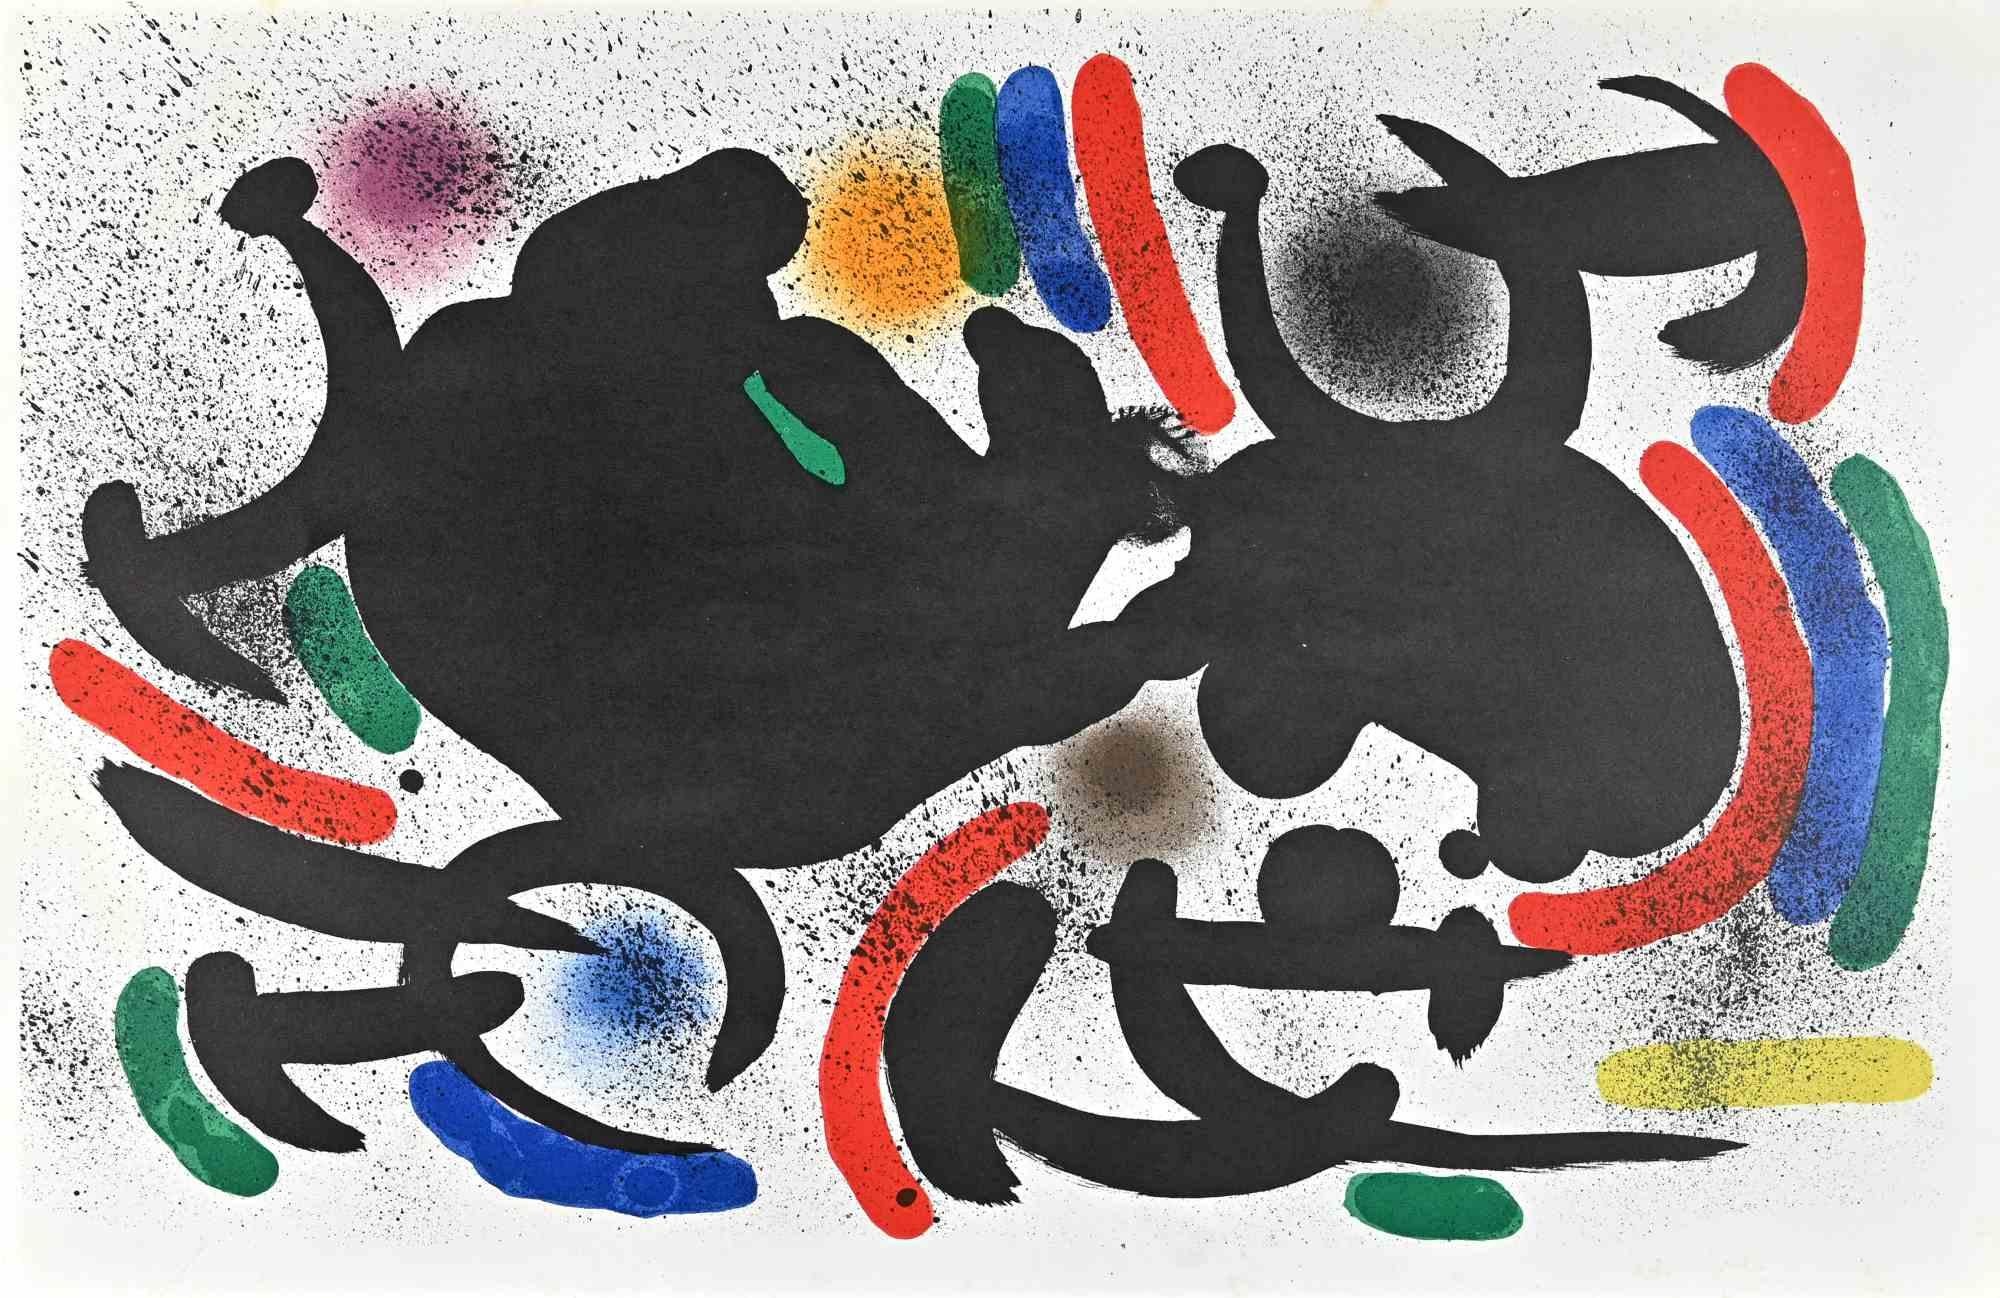 Joan Miró Abstract Print - Miró Lithographe I - Plate VII - Lithograph by Joan Mirò - 1972